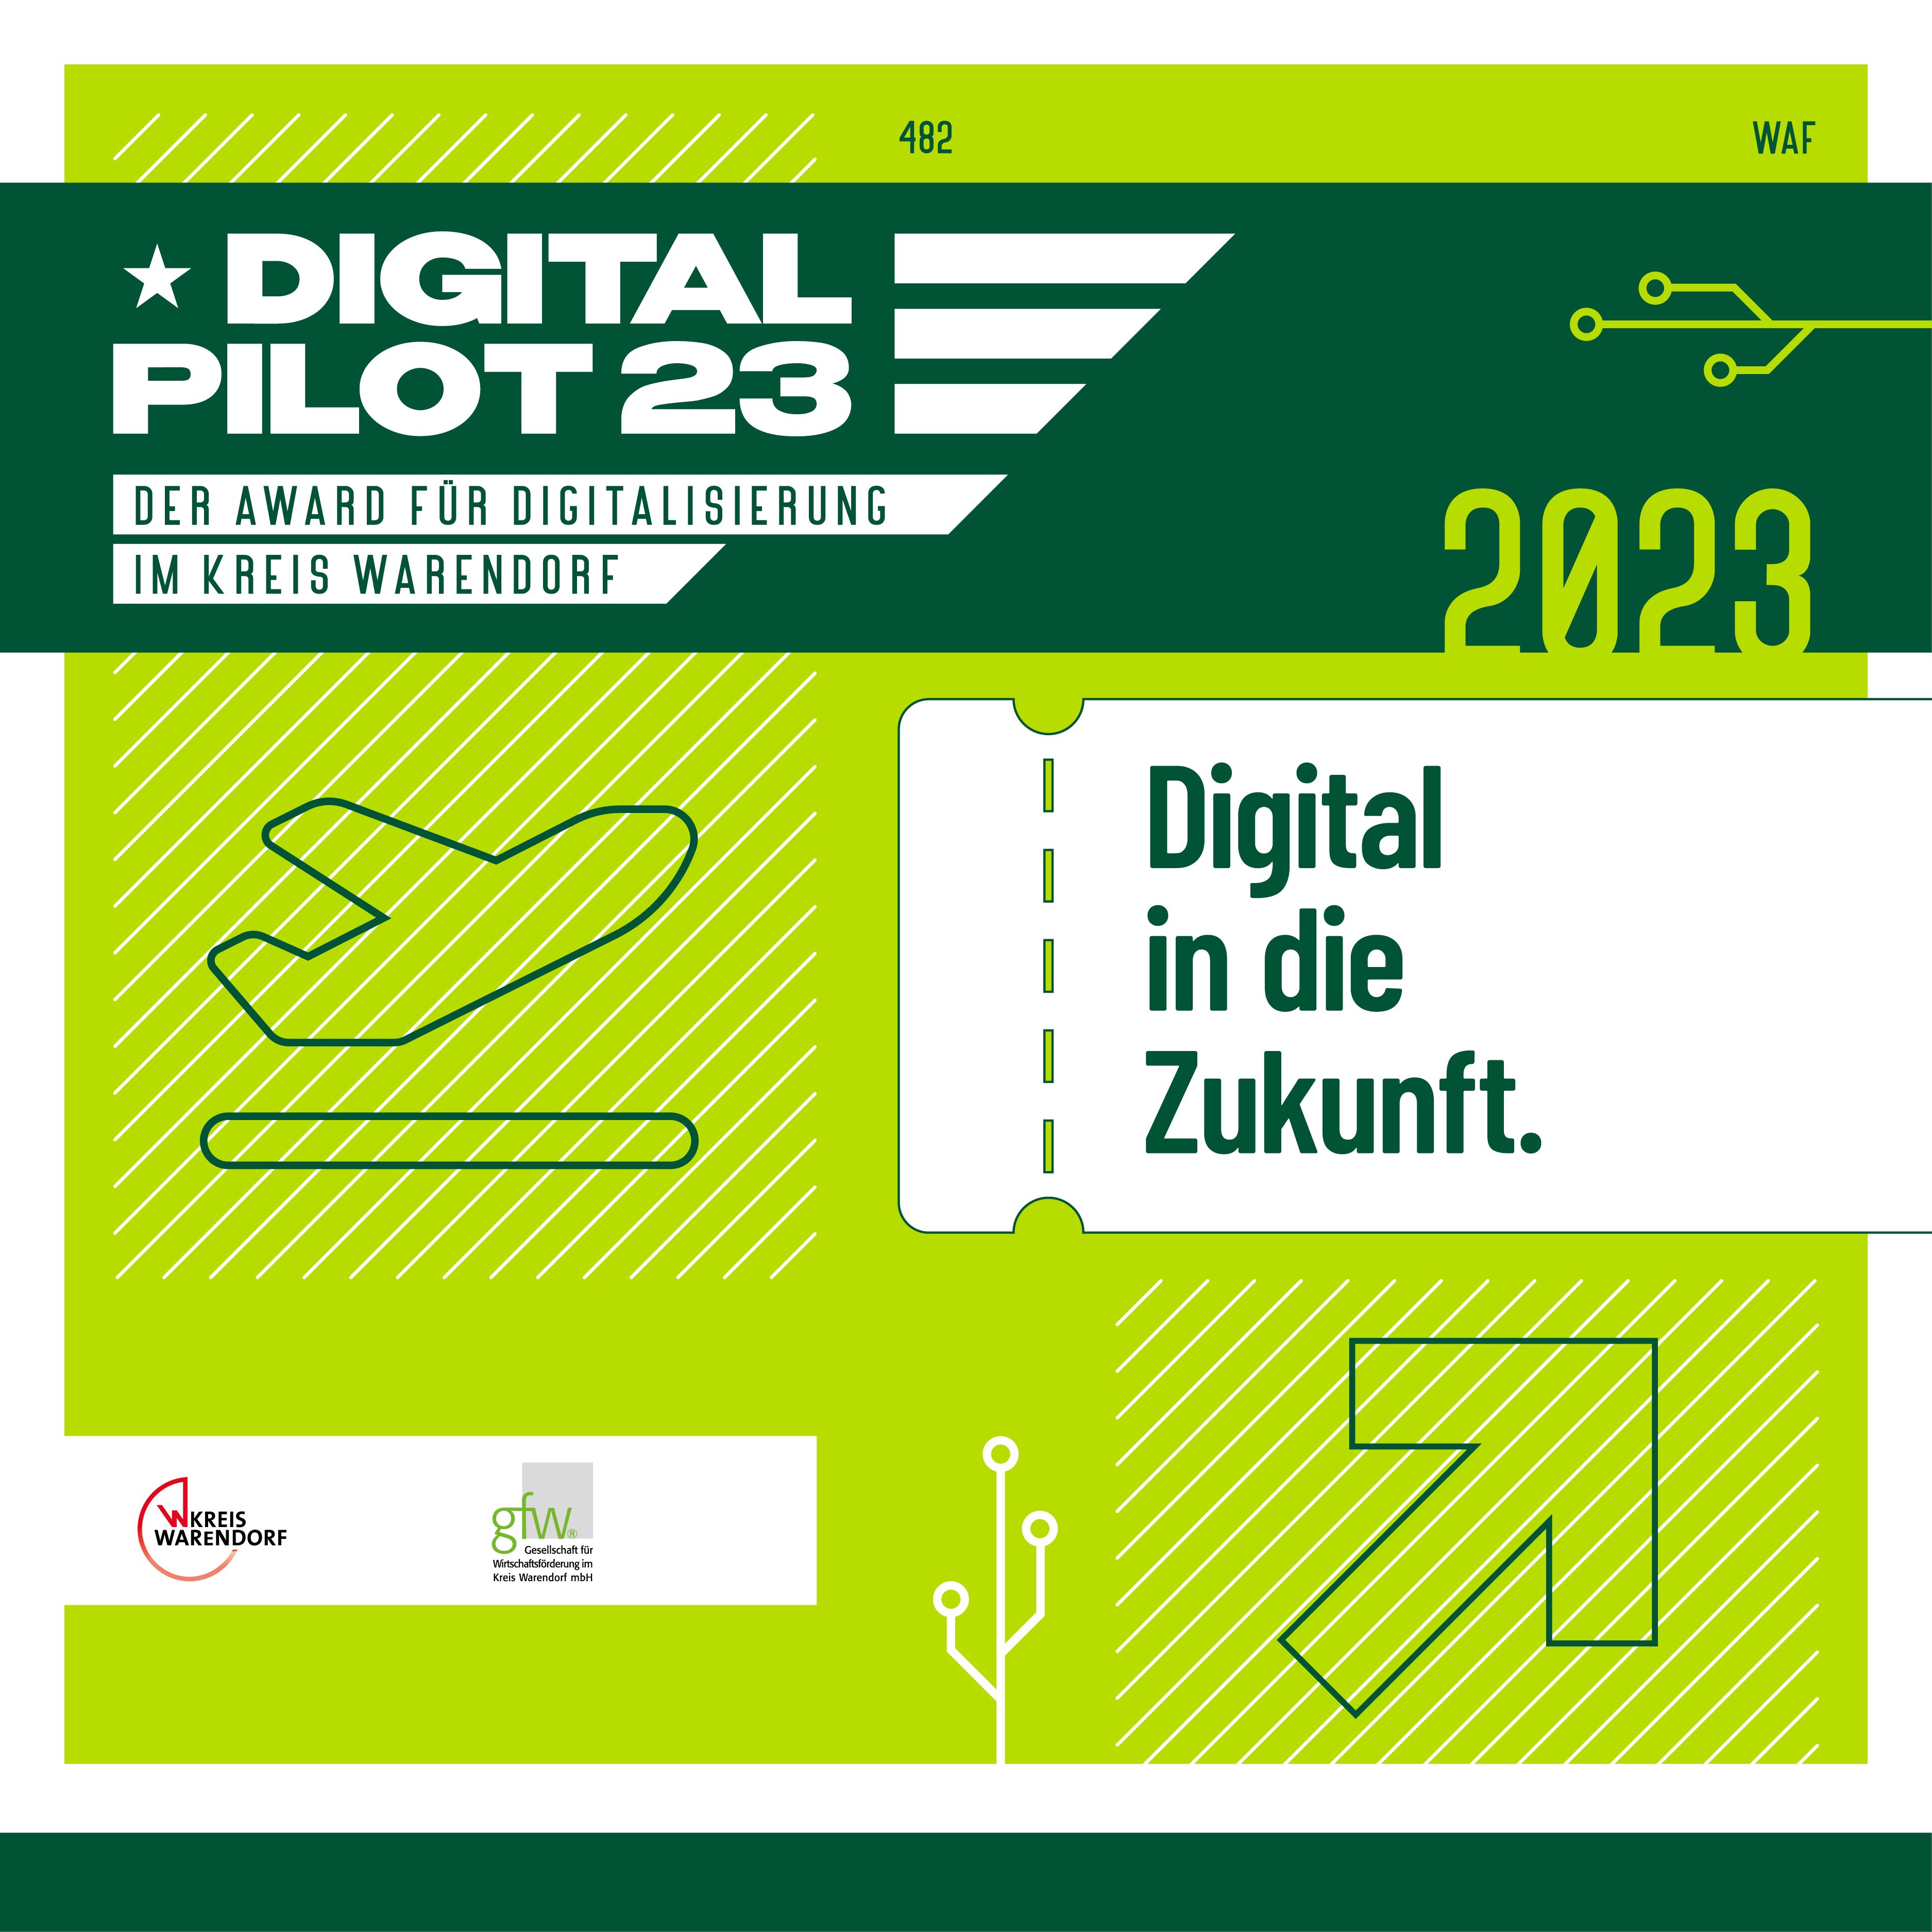 The Digital.Pilot23